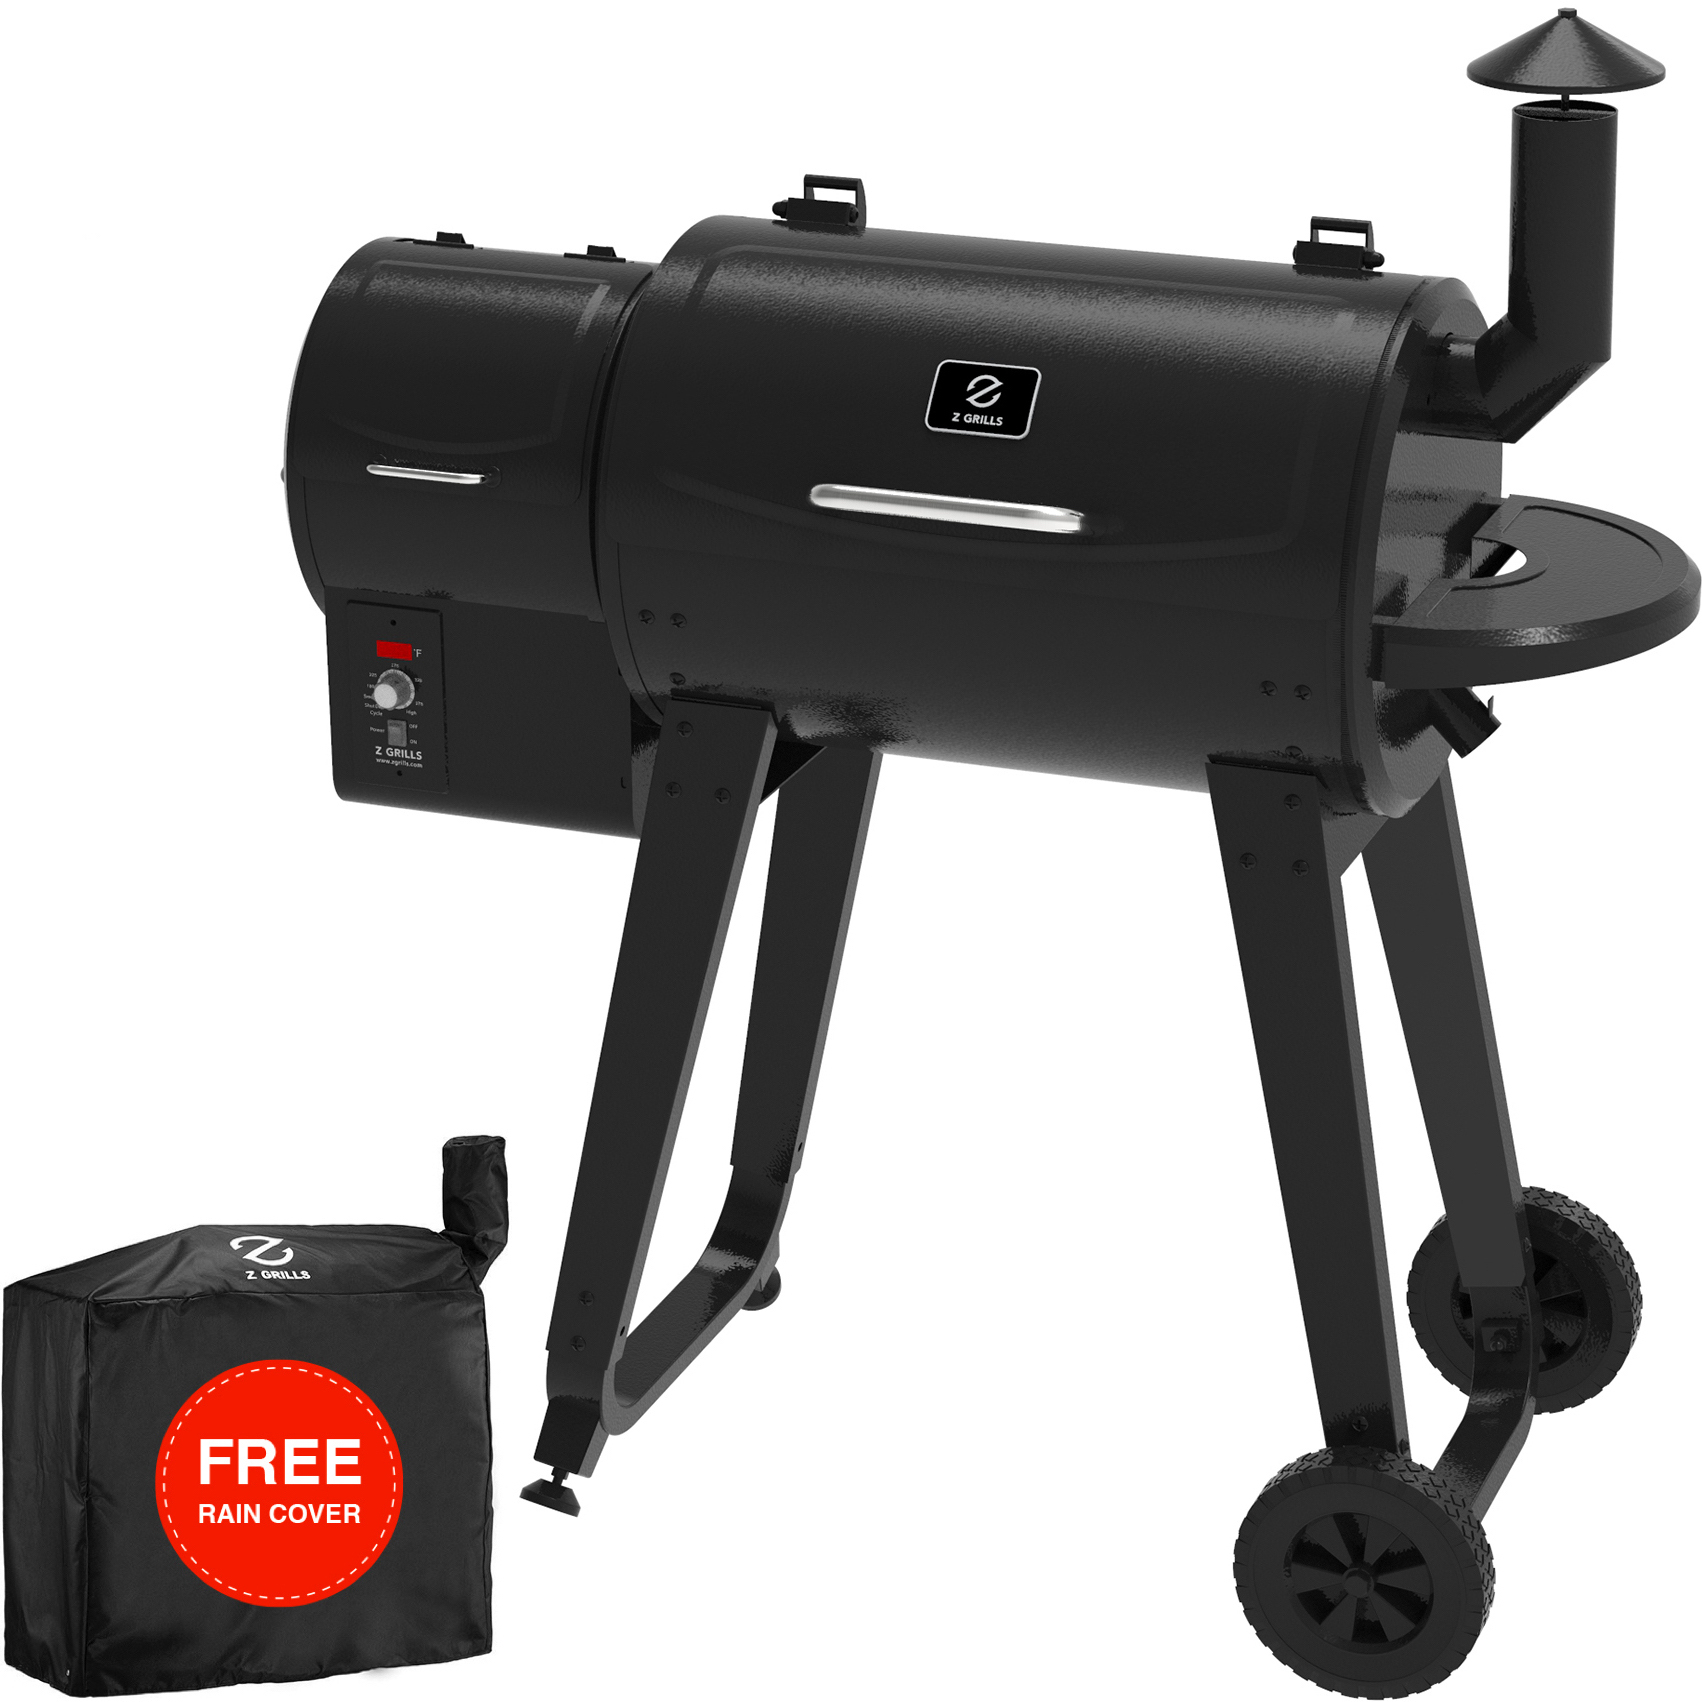 Z GRILLS ZPG-450A3 Wood Pellet Grill & Smoker 8-in-1 BBQ 2022 model, Black - image 1 of 11